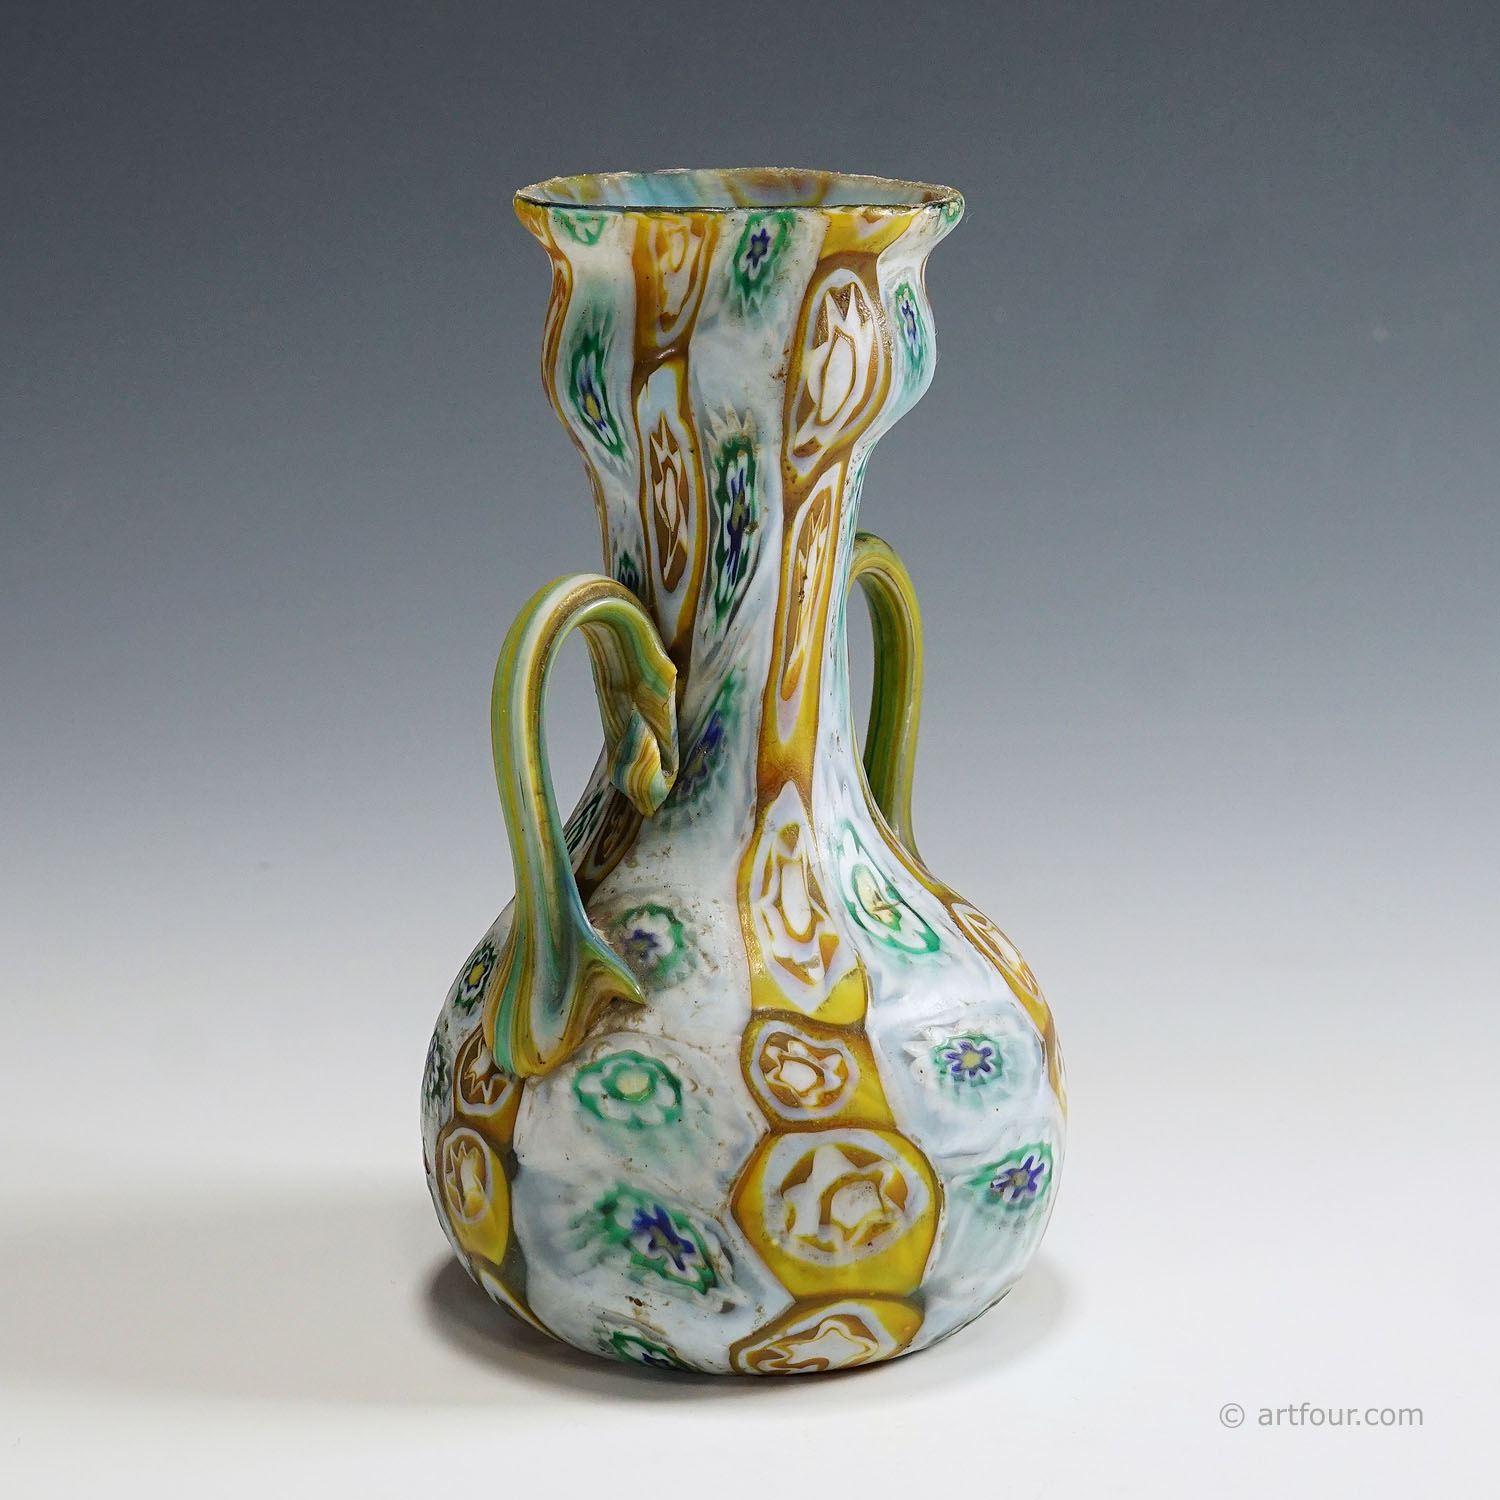 Antique Millefiori Vase in Brown, Green and White, Fratelli Toso Murano 1910